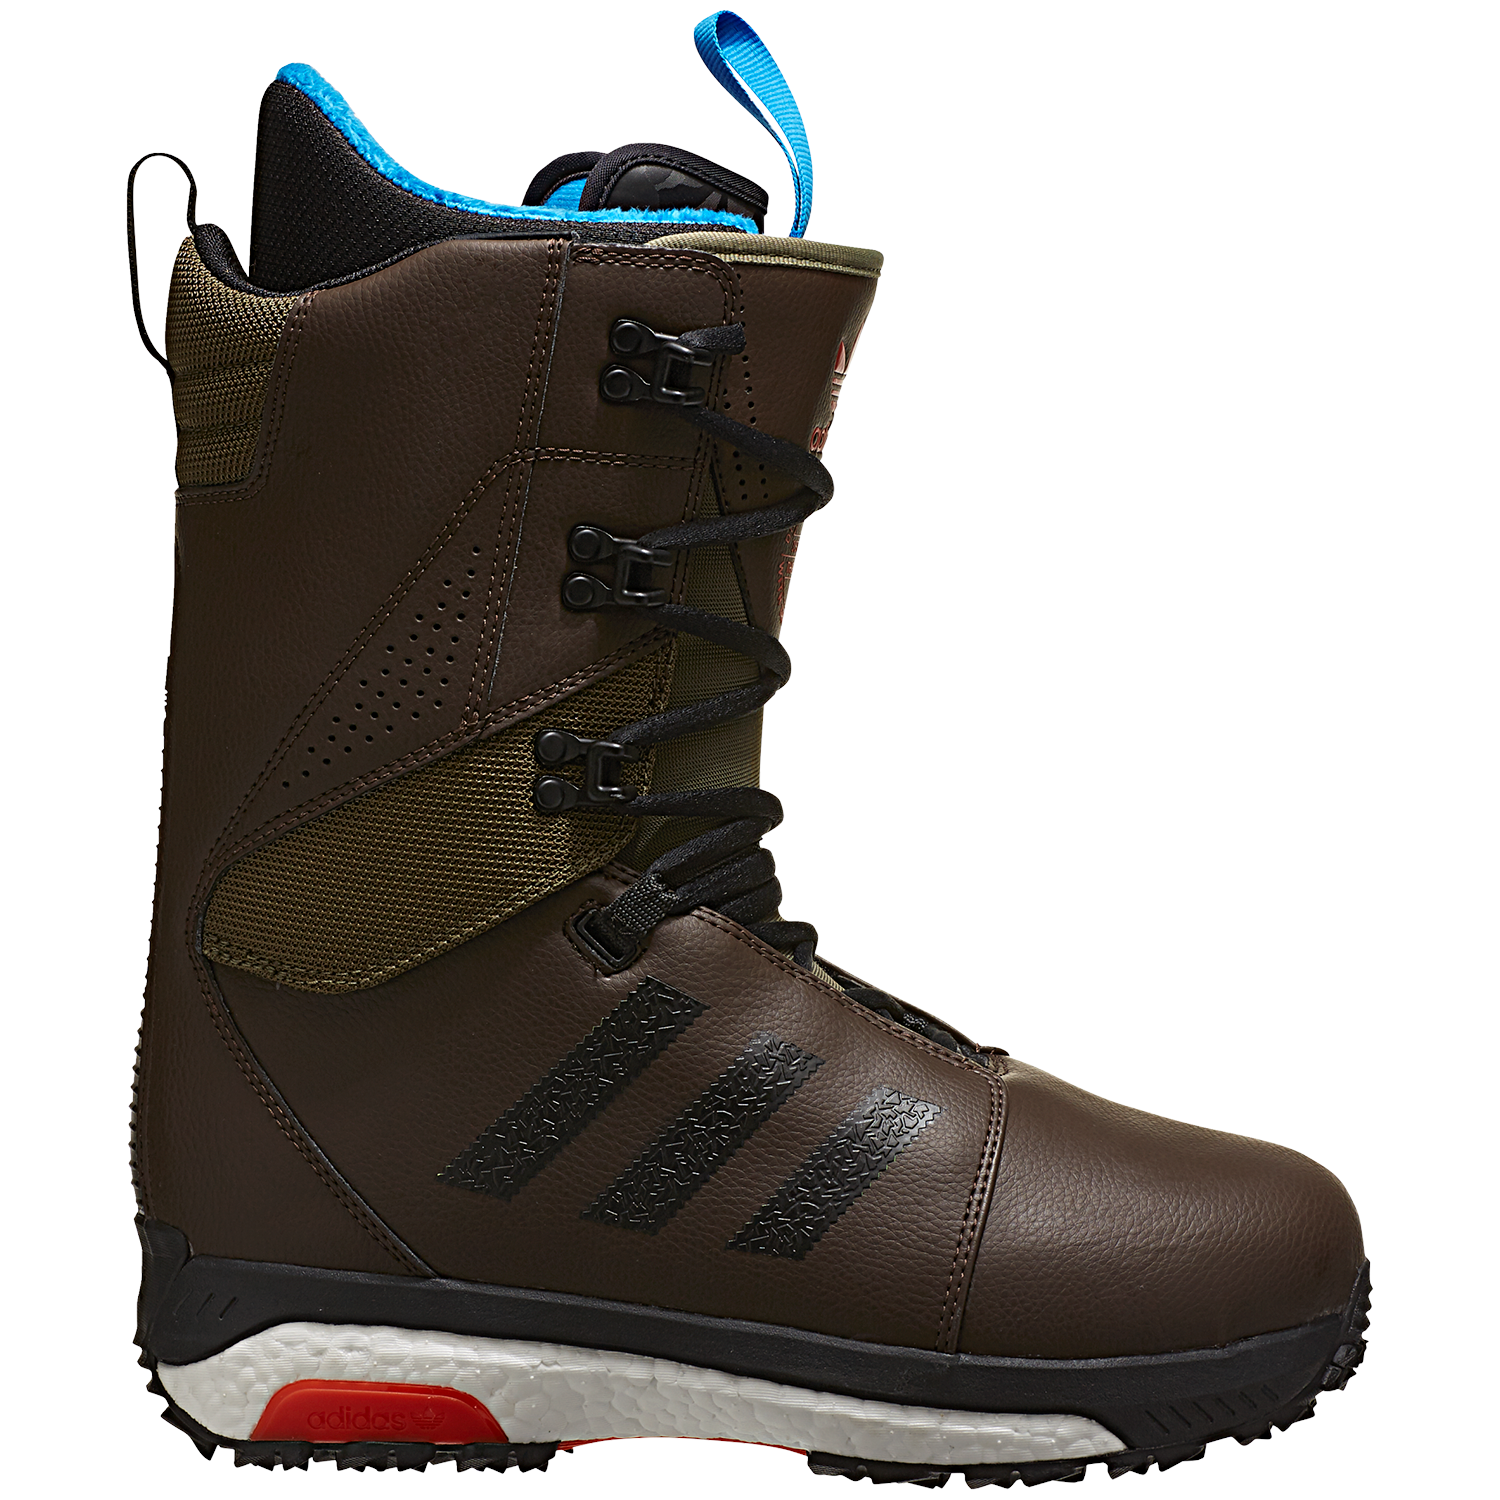 adidas boost snowboard boots